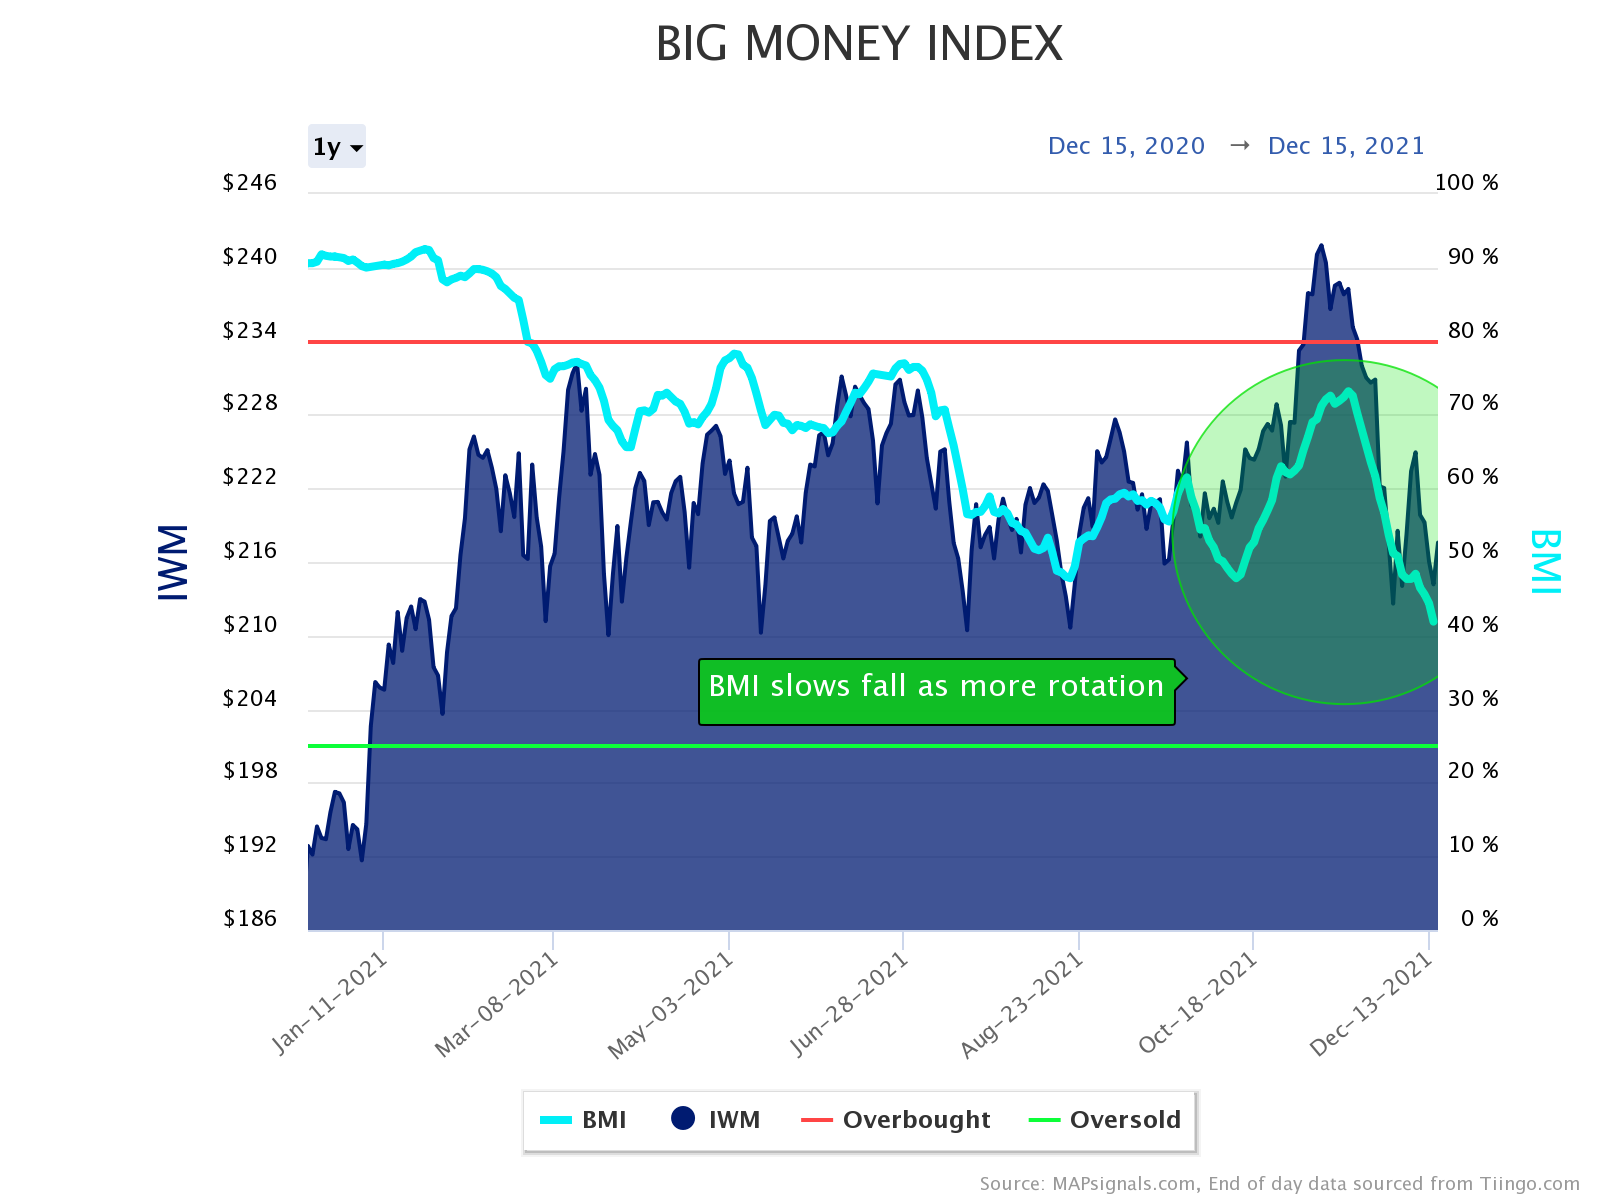 Big Money Index slows fall